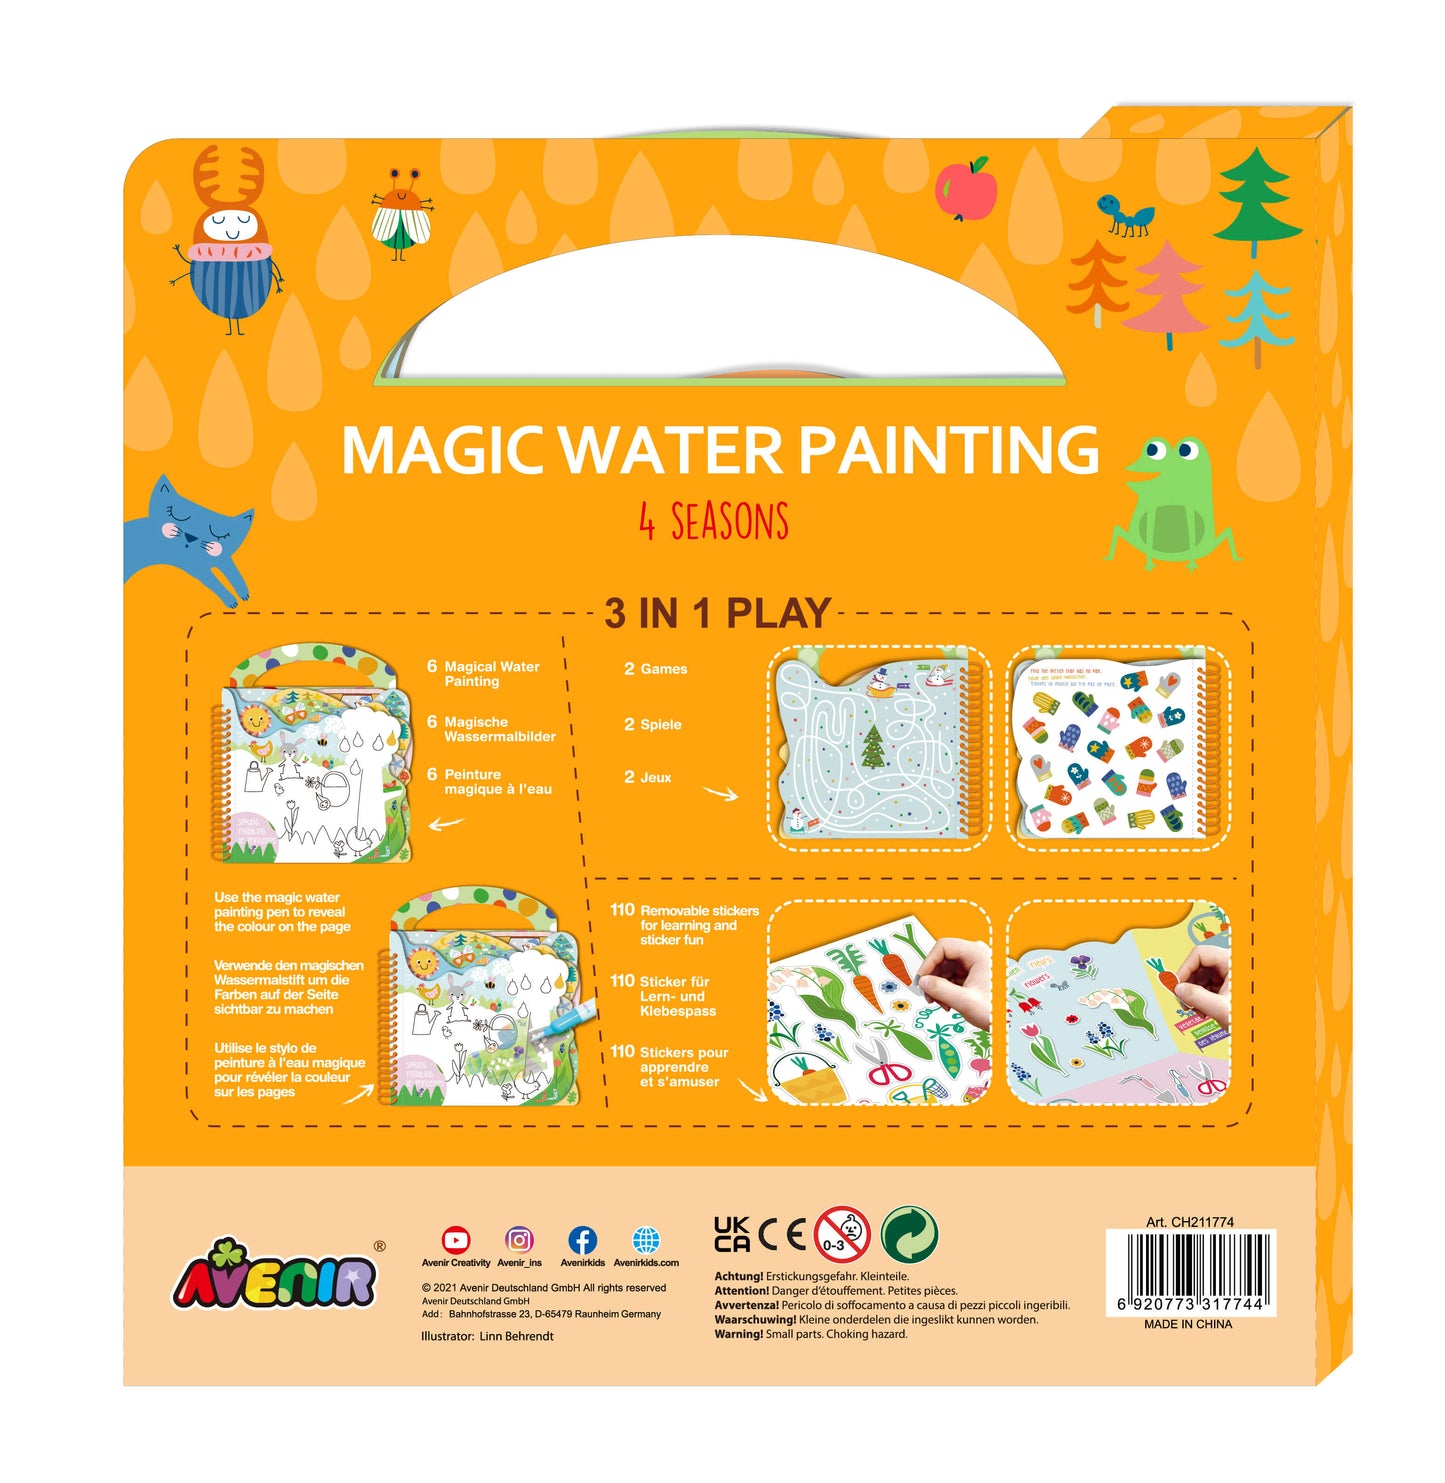 Magic Water Painting 4 Seasons